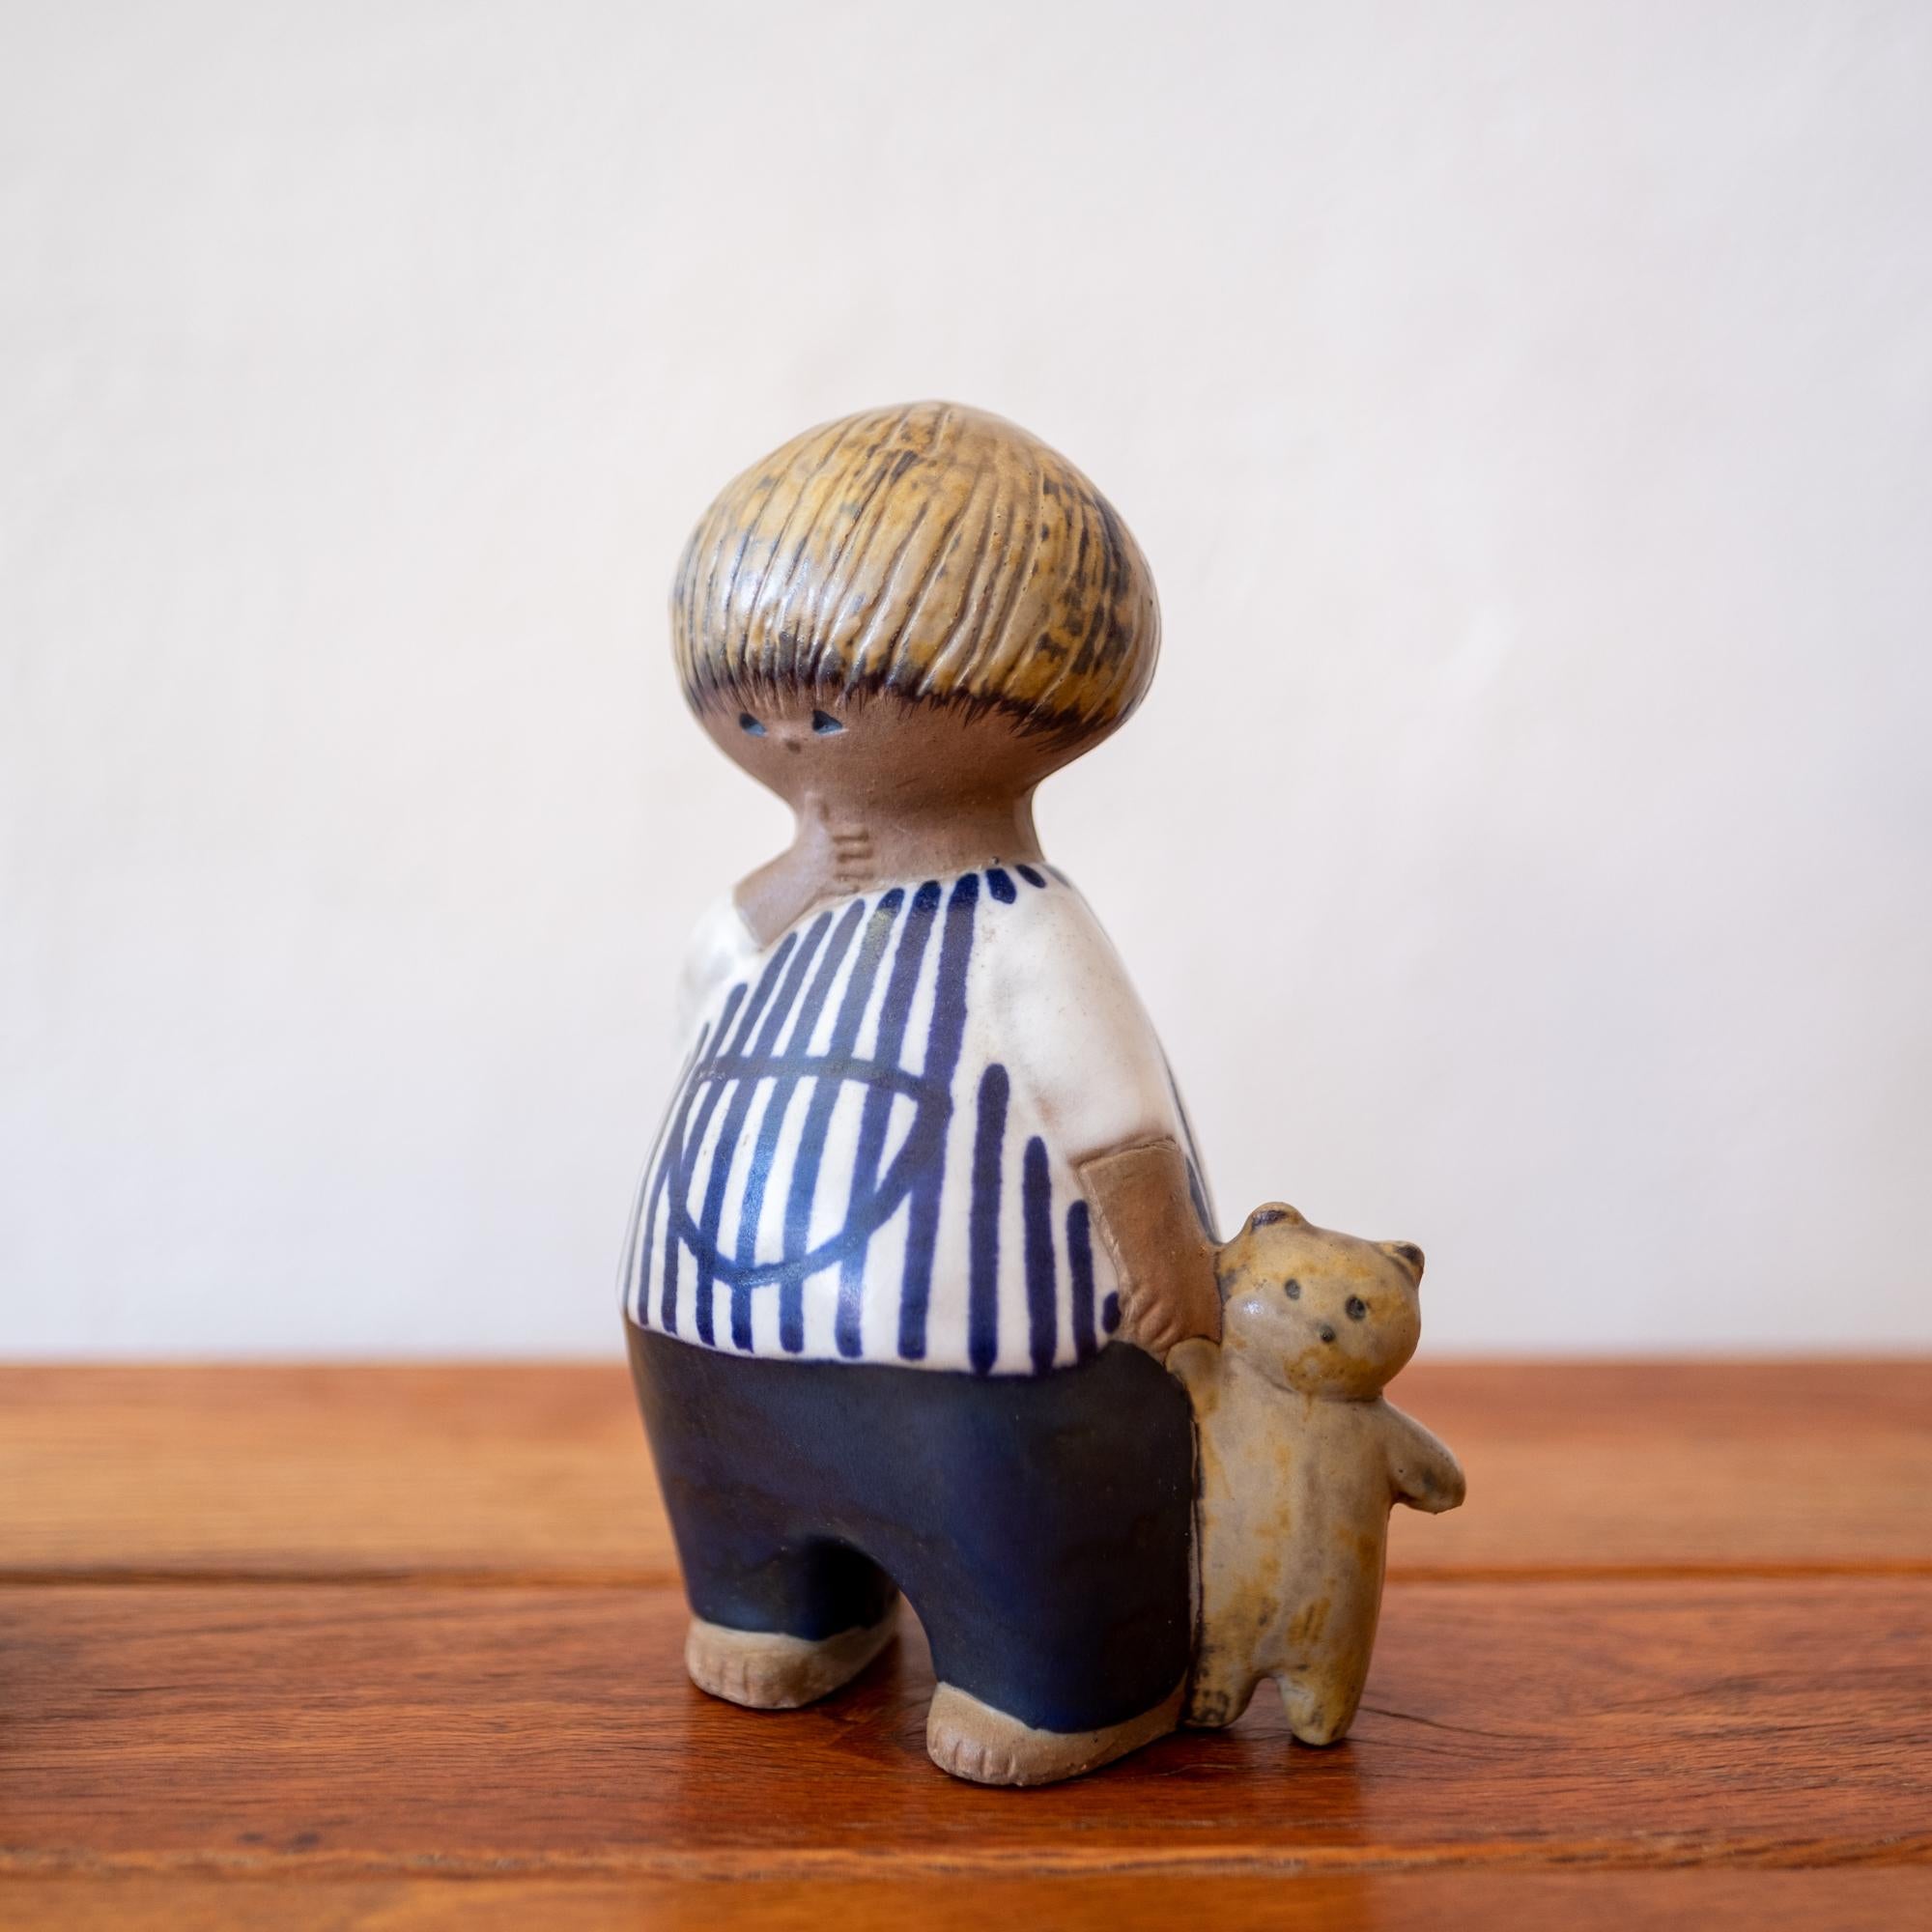 Scandinavian Modern Lisa Larson Ceramic Figures in sags try dads cuter  as